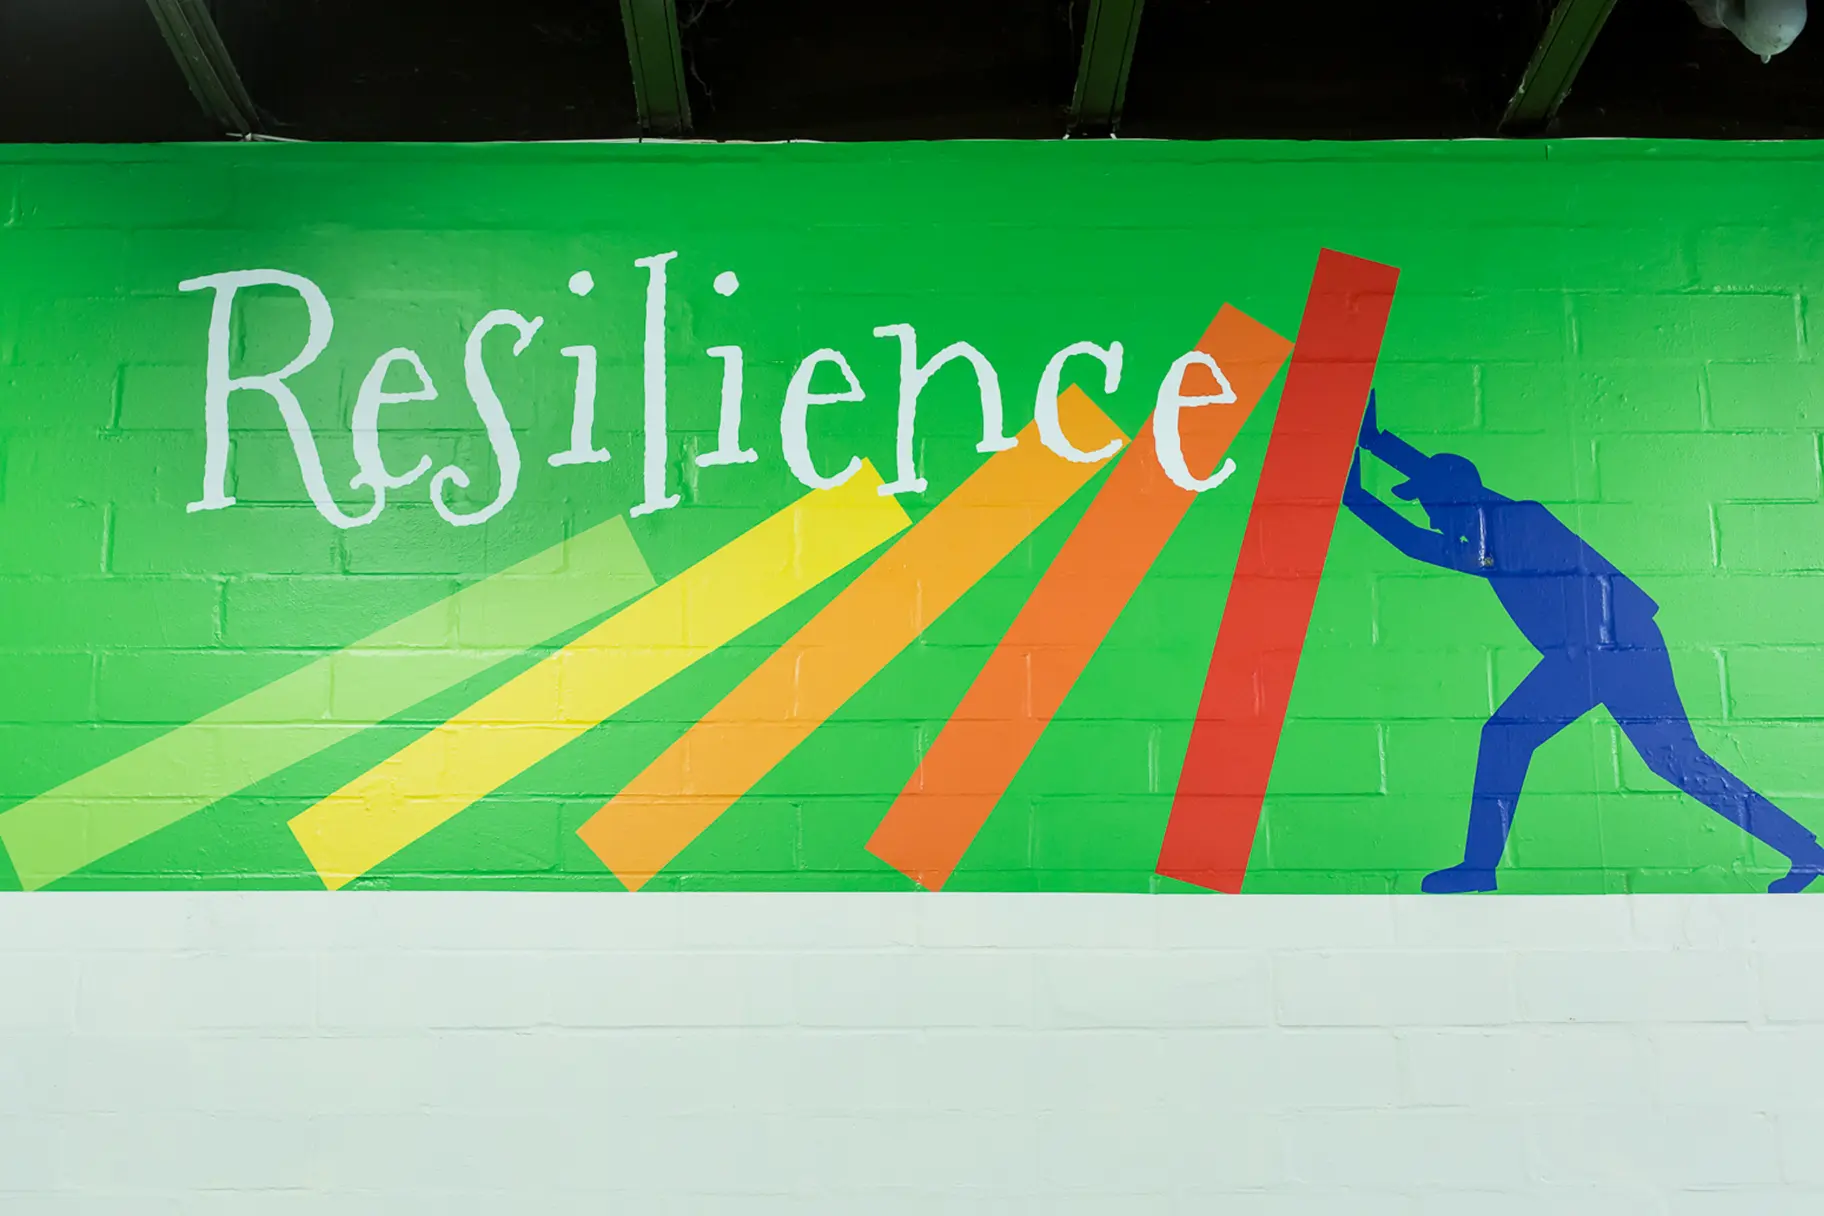 Bespoke school values feature for school hall wall art